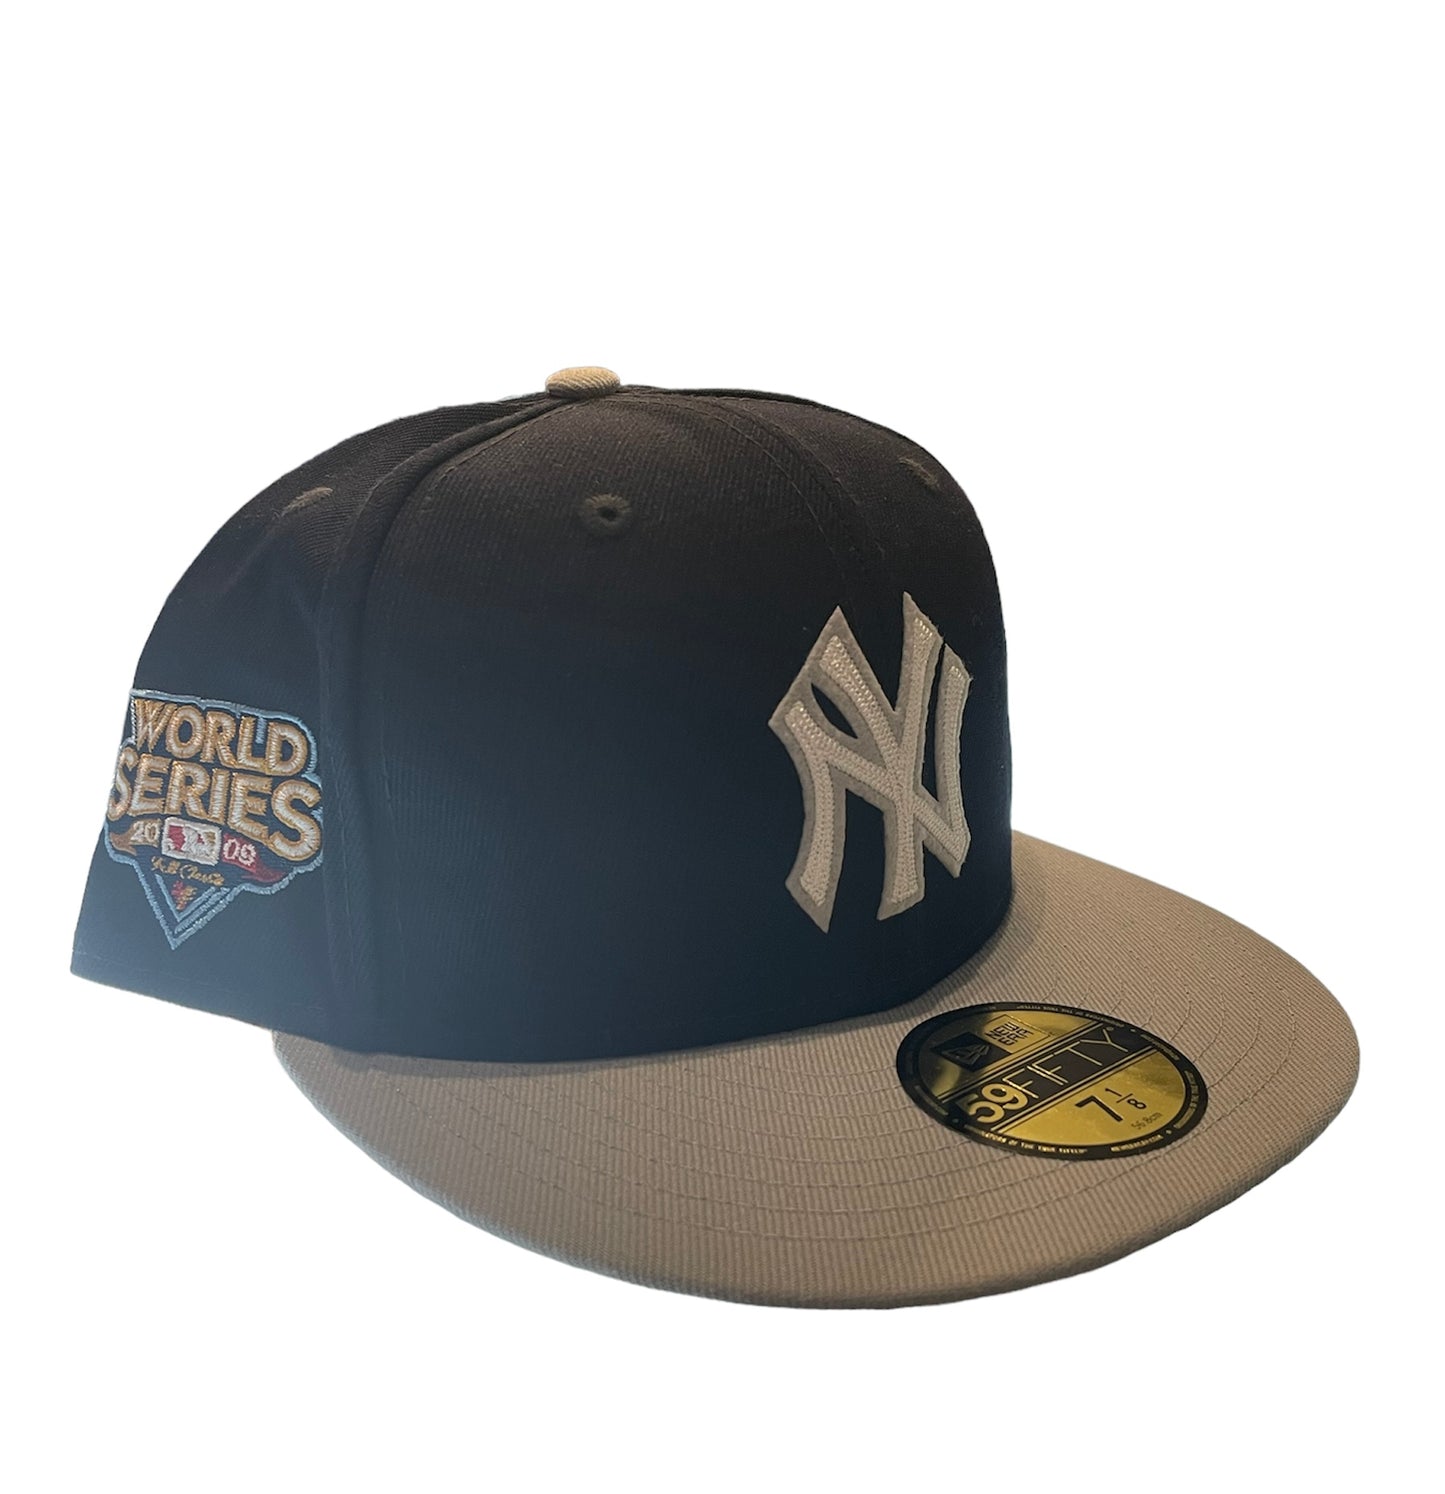 New Era NY Yankees 2009 World Series Fitted "Navy/Grey"